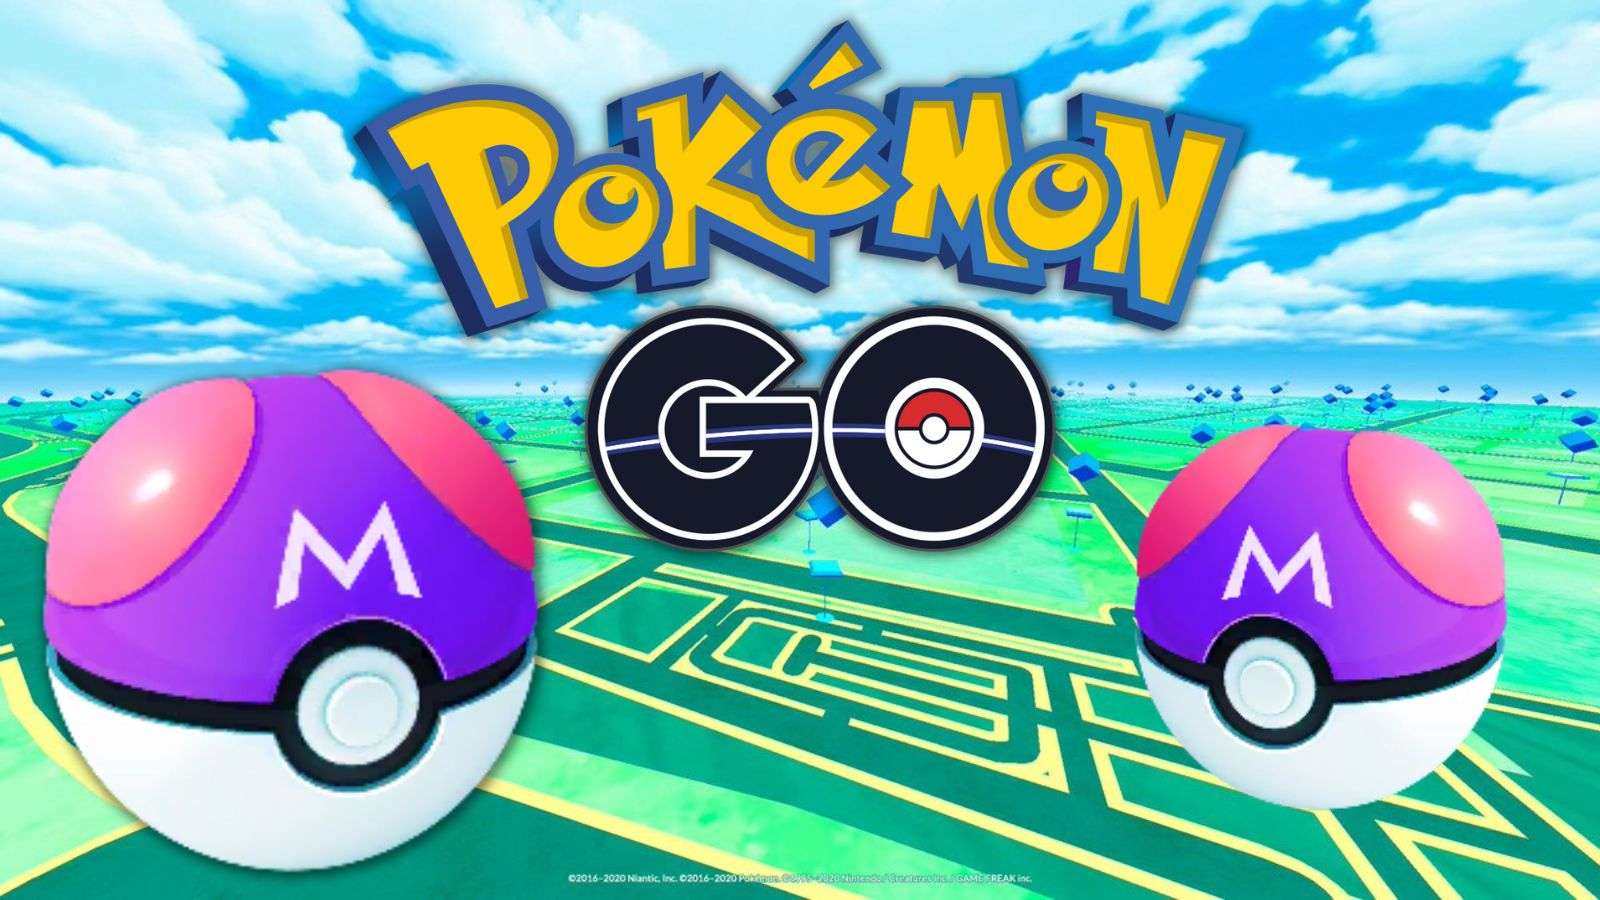 Pokémon GO 2 The New Era of Augmented Reality Gaming